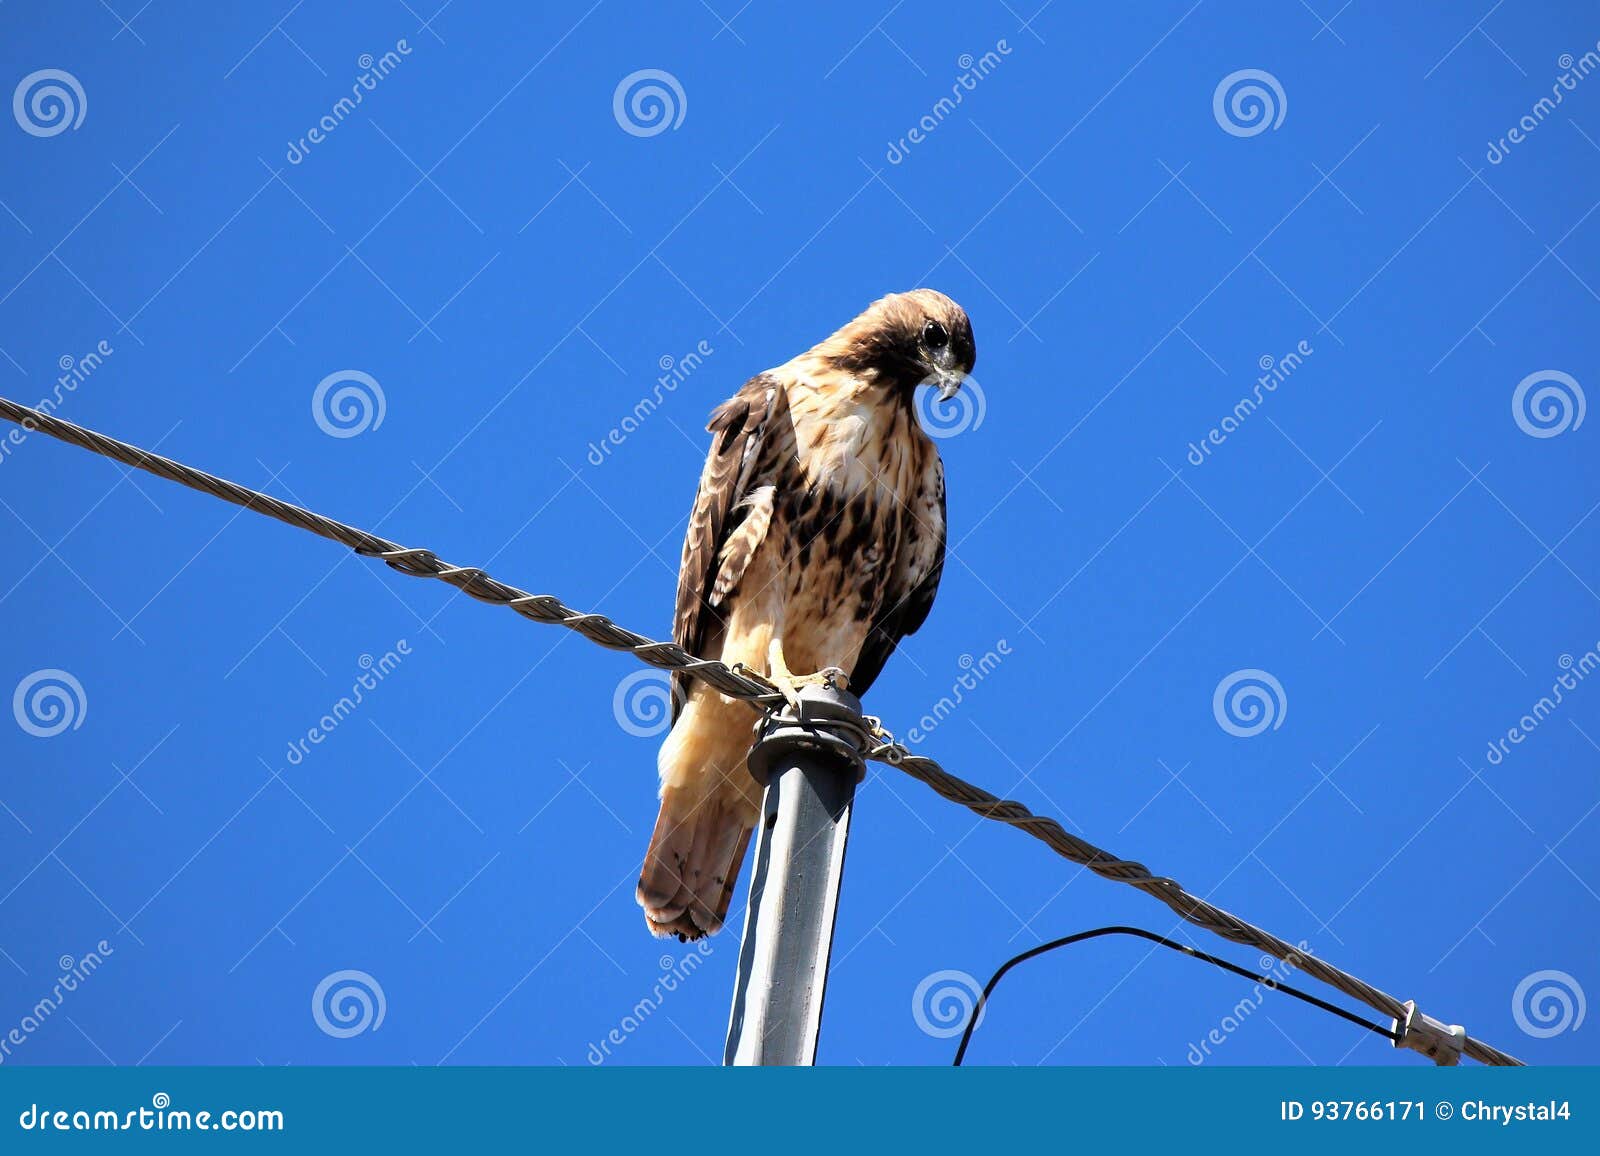 Hawk stock image. Image of bird, feathers, blue, hawk - 93766171